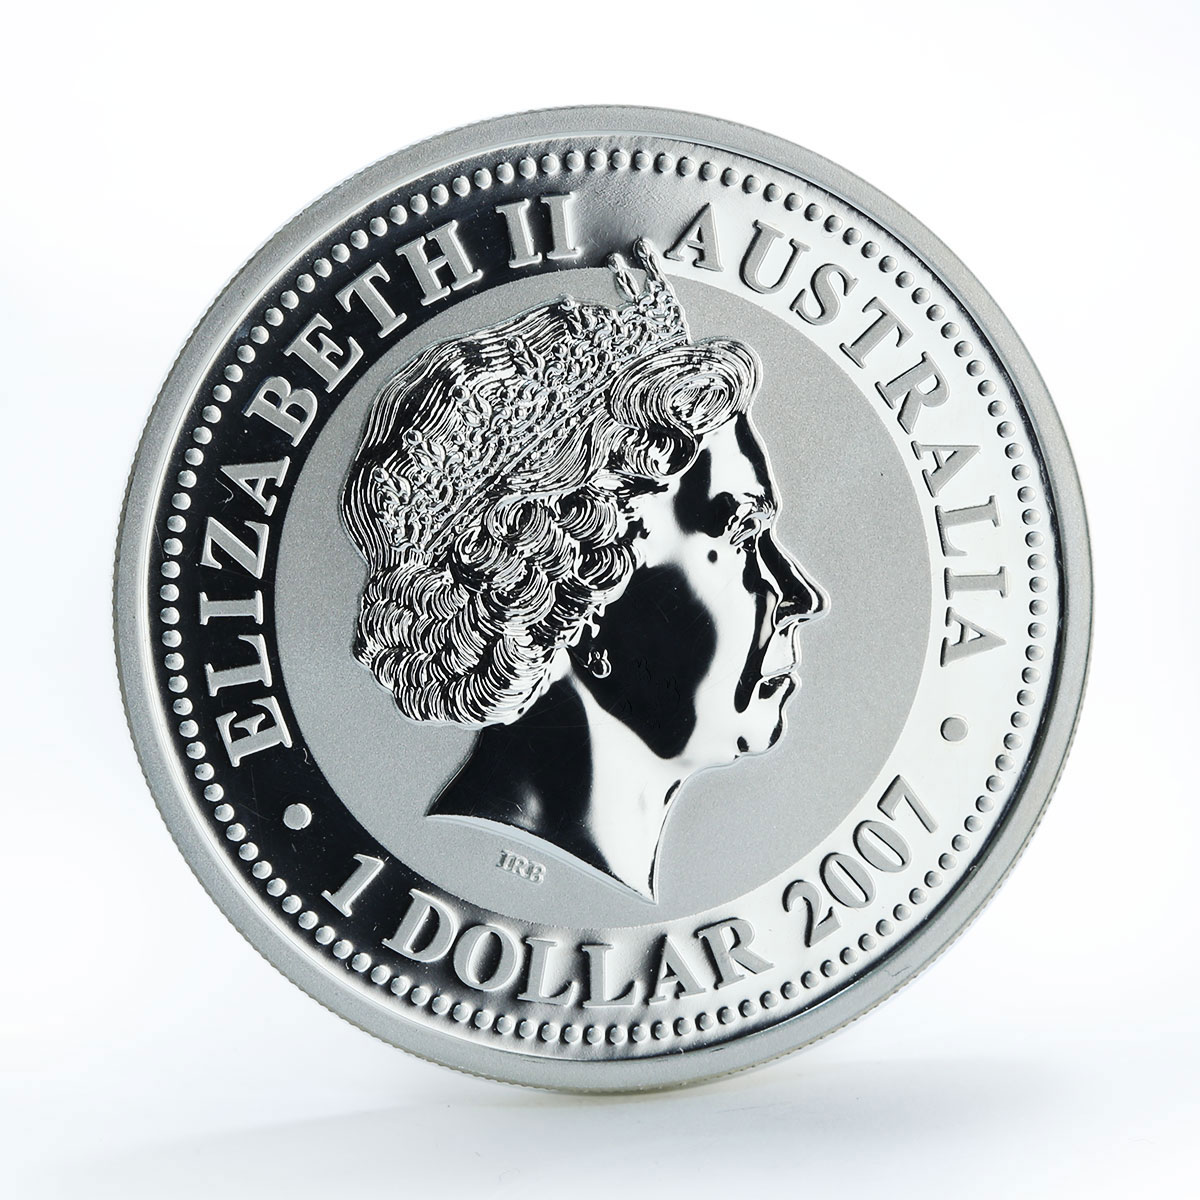 Australia 1 dollar Year of the Ox Lunar Calendar Series I silver coin 2007